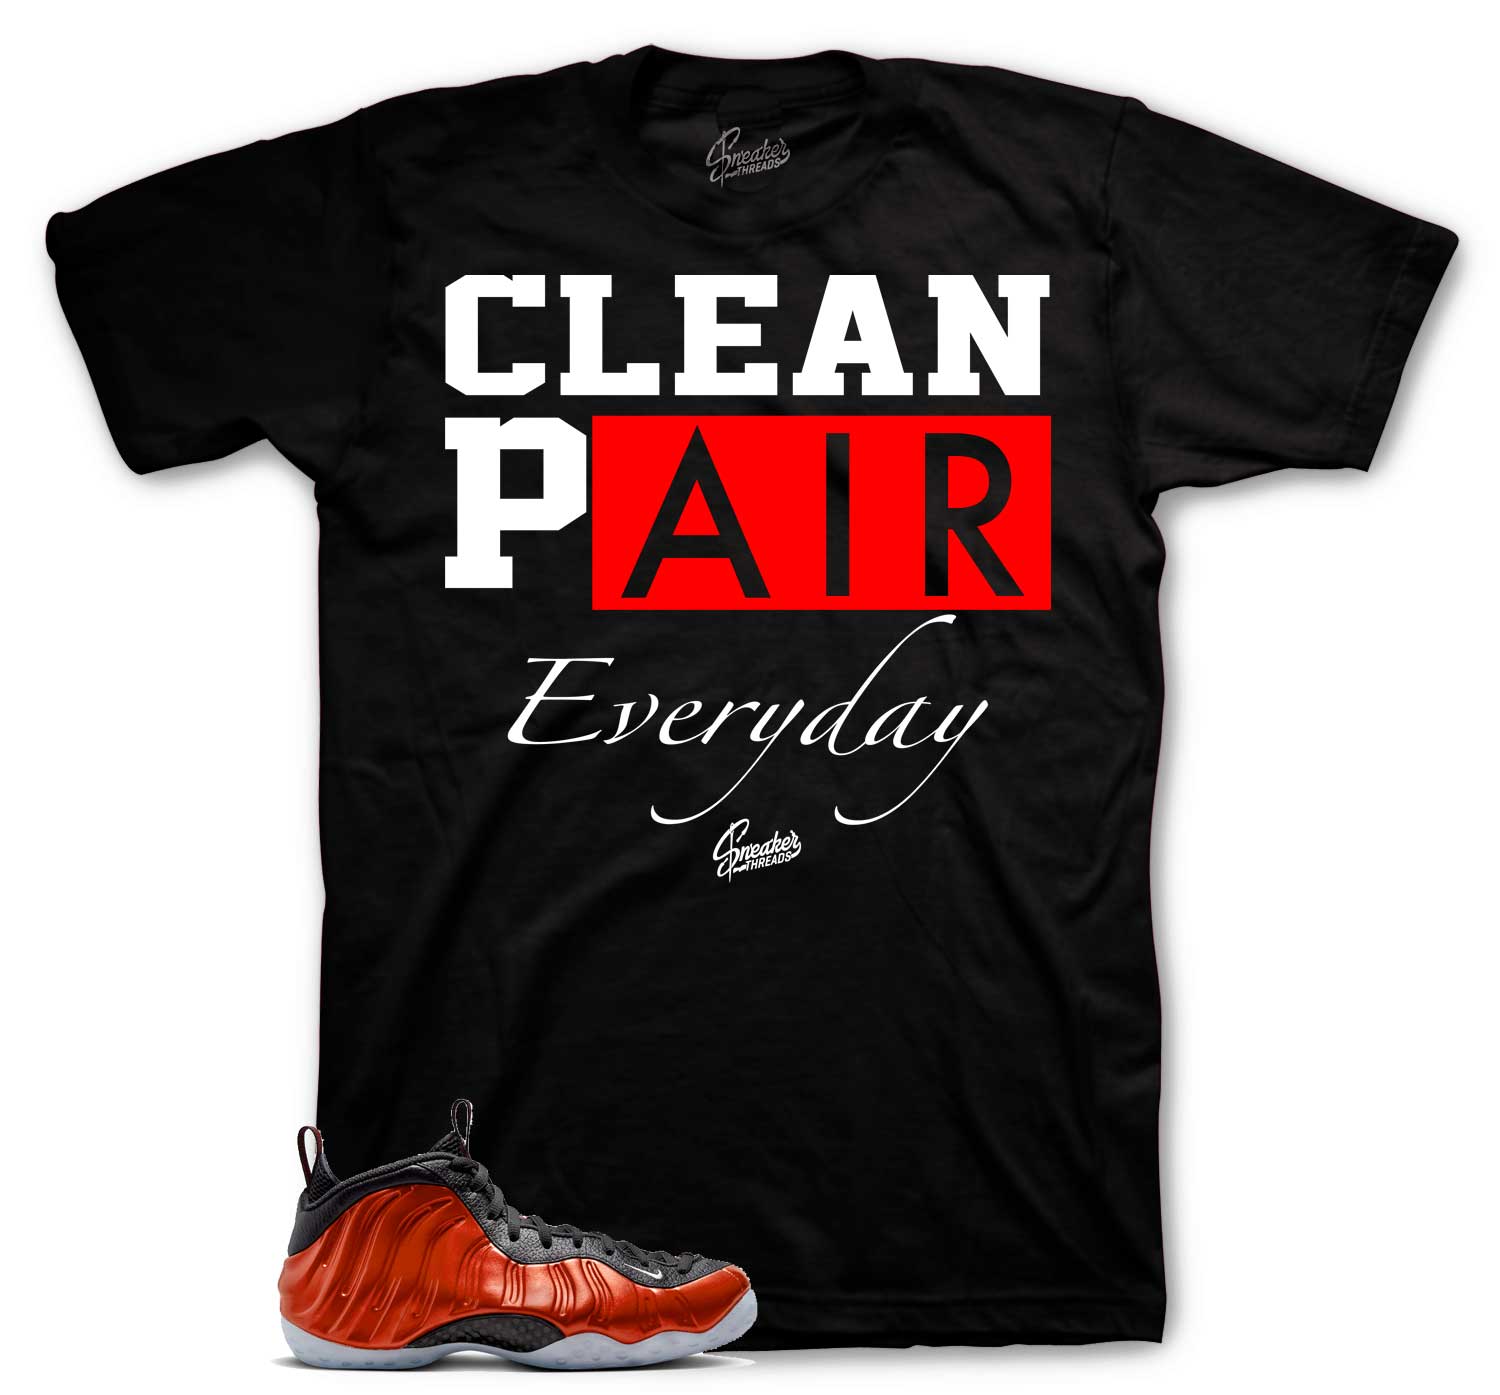 Foamposite Metallic Red Shirt - Clean Pair - Black